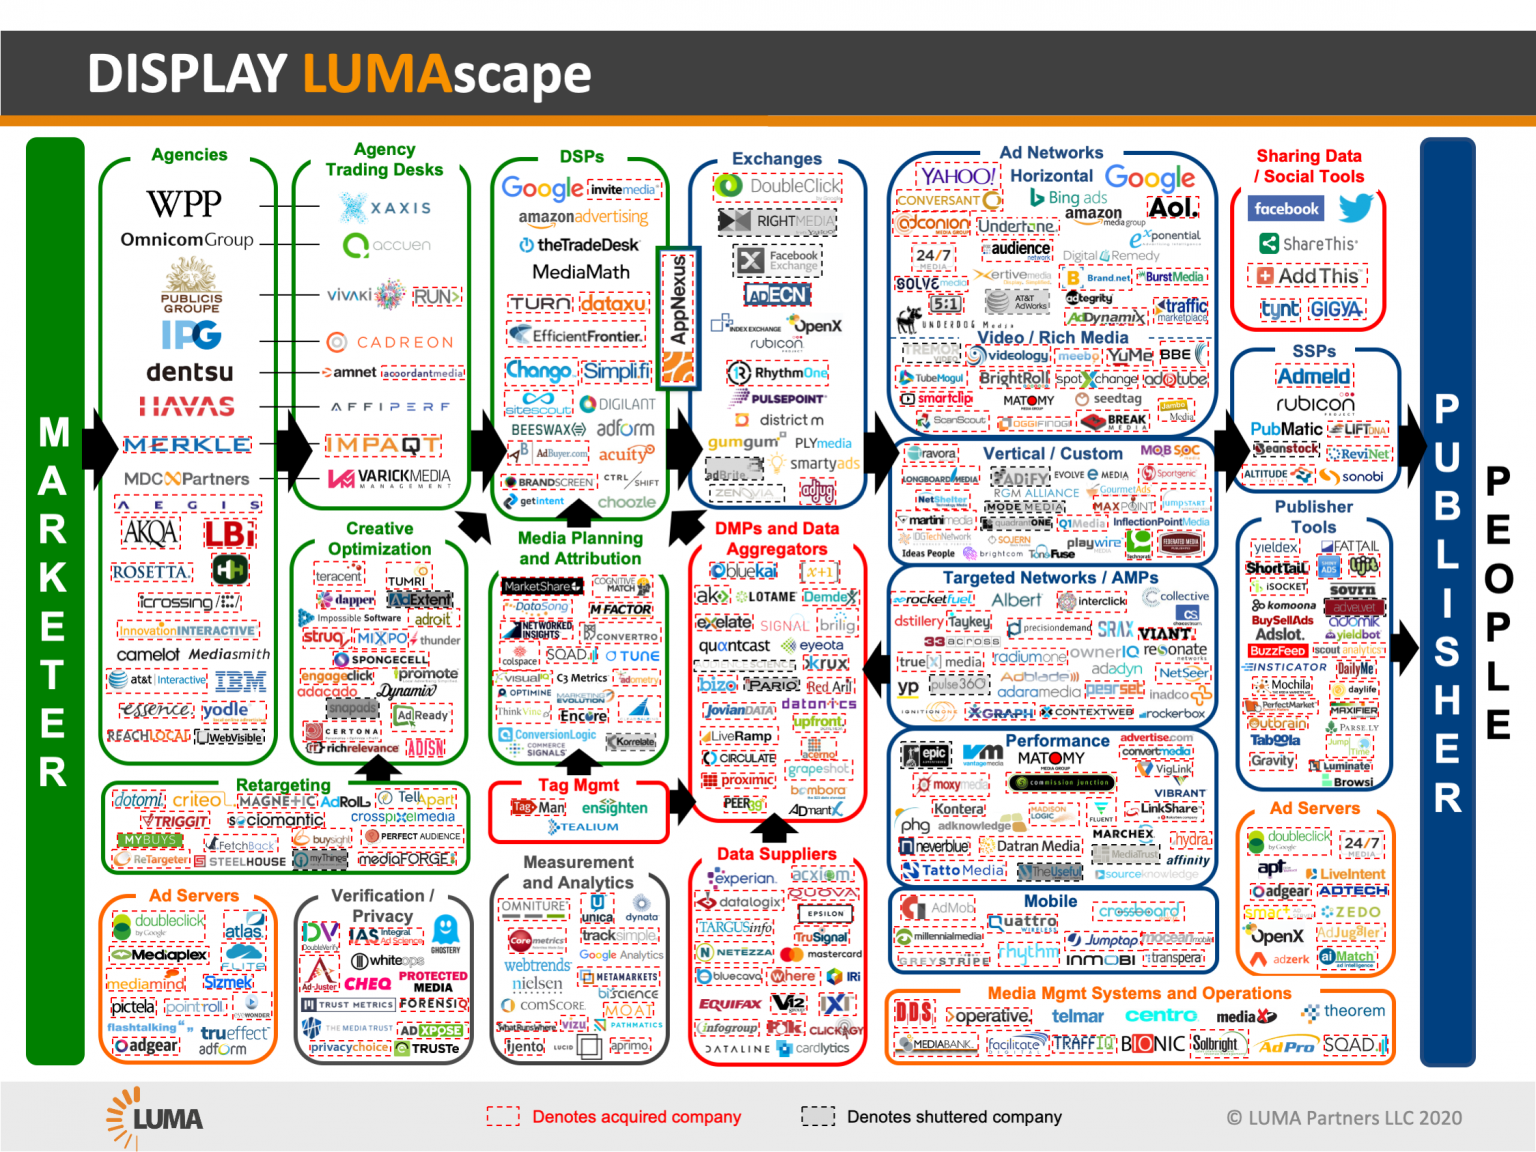 Display Advertising Technology Landscape. Source: LUMA Partners LLC